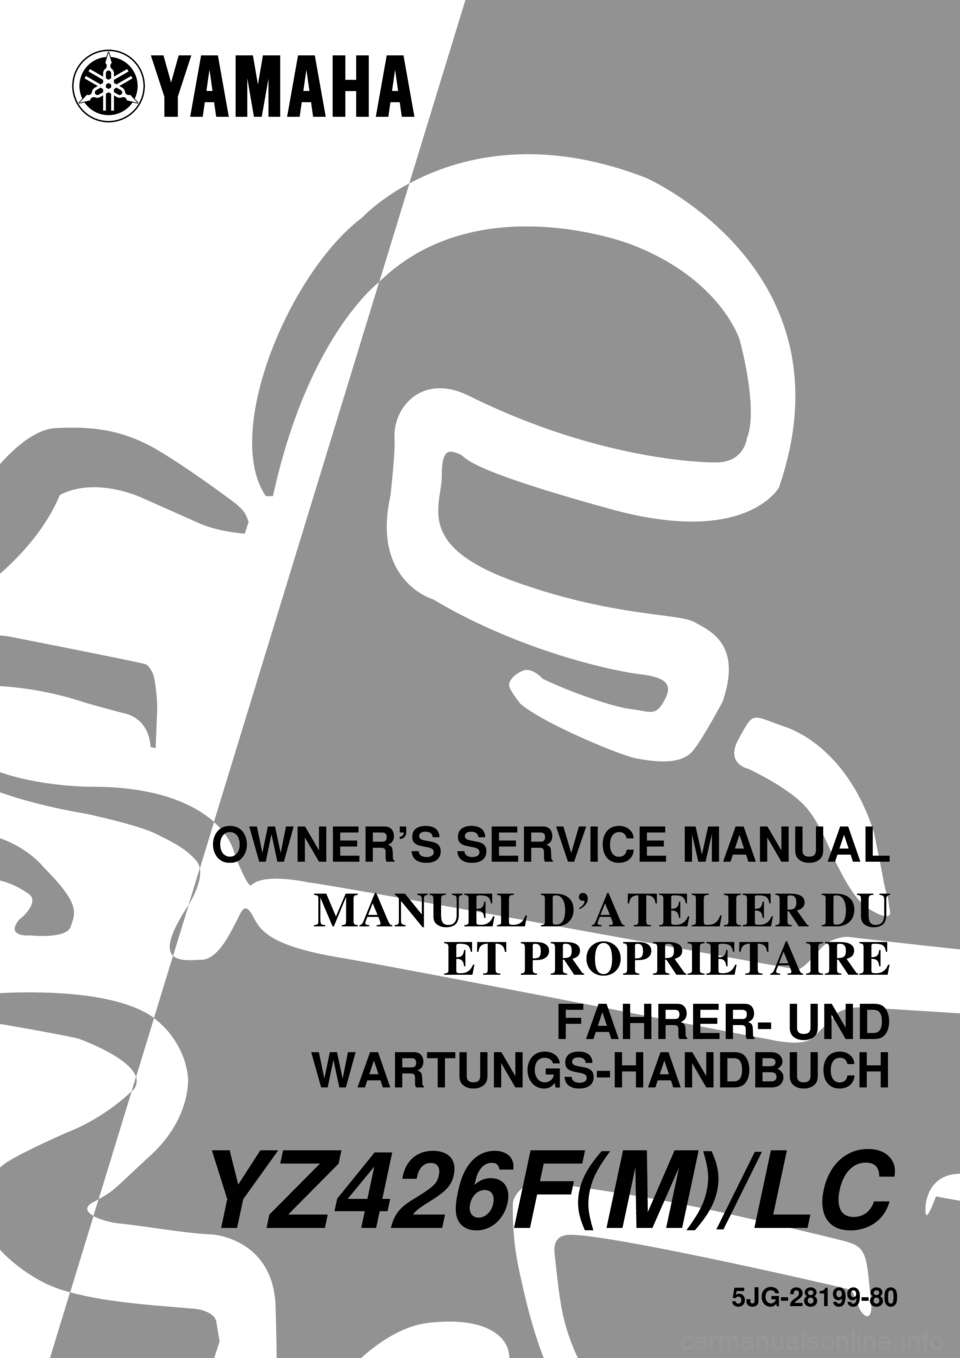 YAMAHA YZ426F 2000  Owners Manual 5JG-28199-80
YZ426F(M)/LC
OWNER’S SERVICE MANUAL
MANUEL D’ATELIER DU
ET PROPRIETAIRE
FAHRER- UND
WARTUNGS-HANDBUCH 